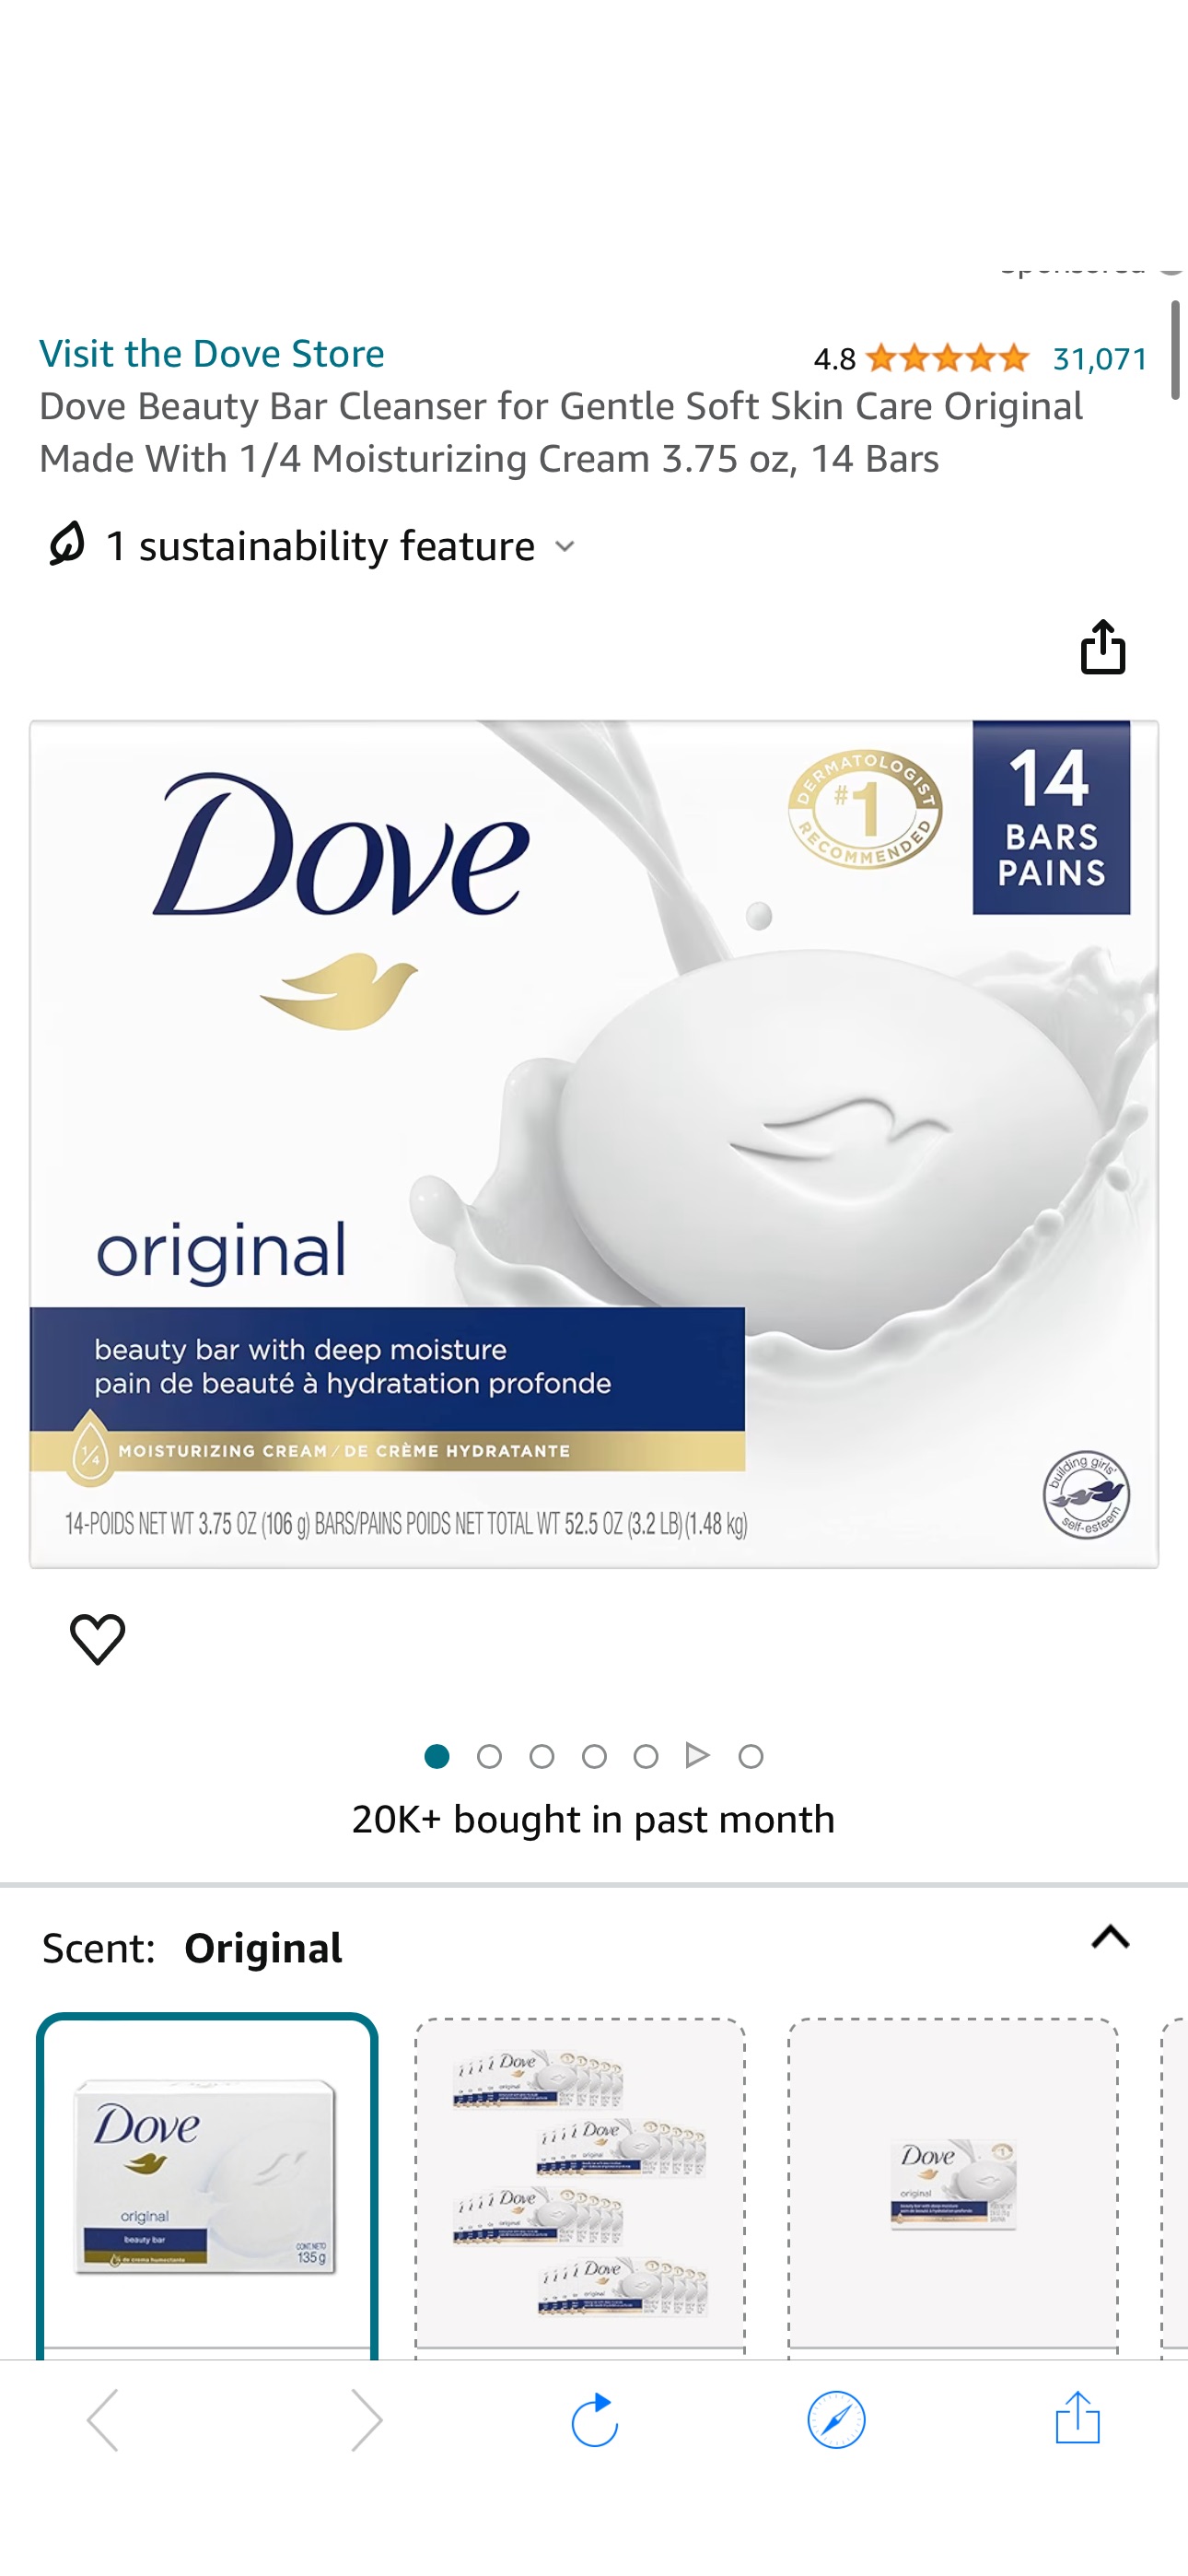 Amazon.com : Dove Beauty Bar Cleanser for Gentle Soft Skin Care Original Made With 1/4 Moisturizing Cream 3.75 oz, 14 Bars : Health & Household